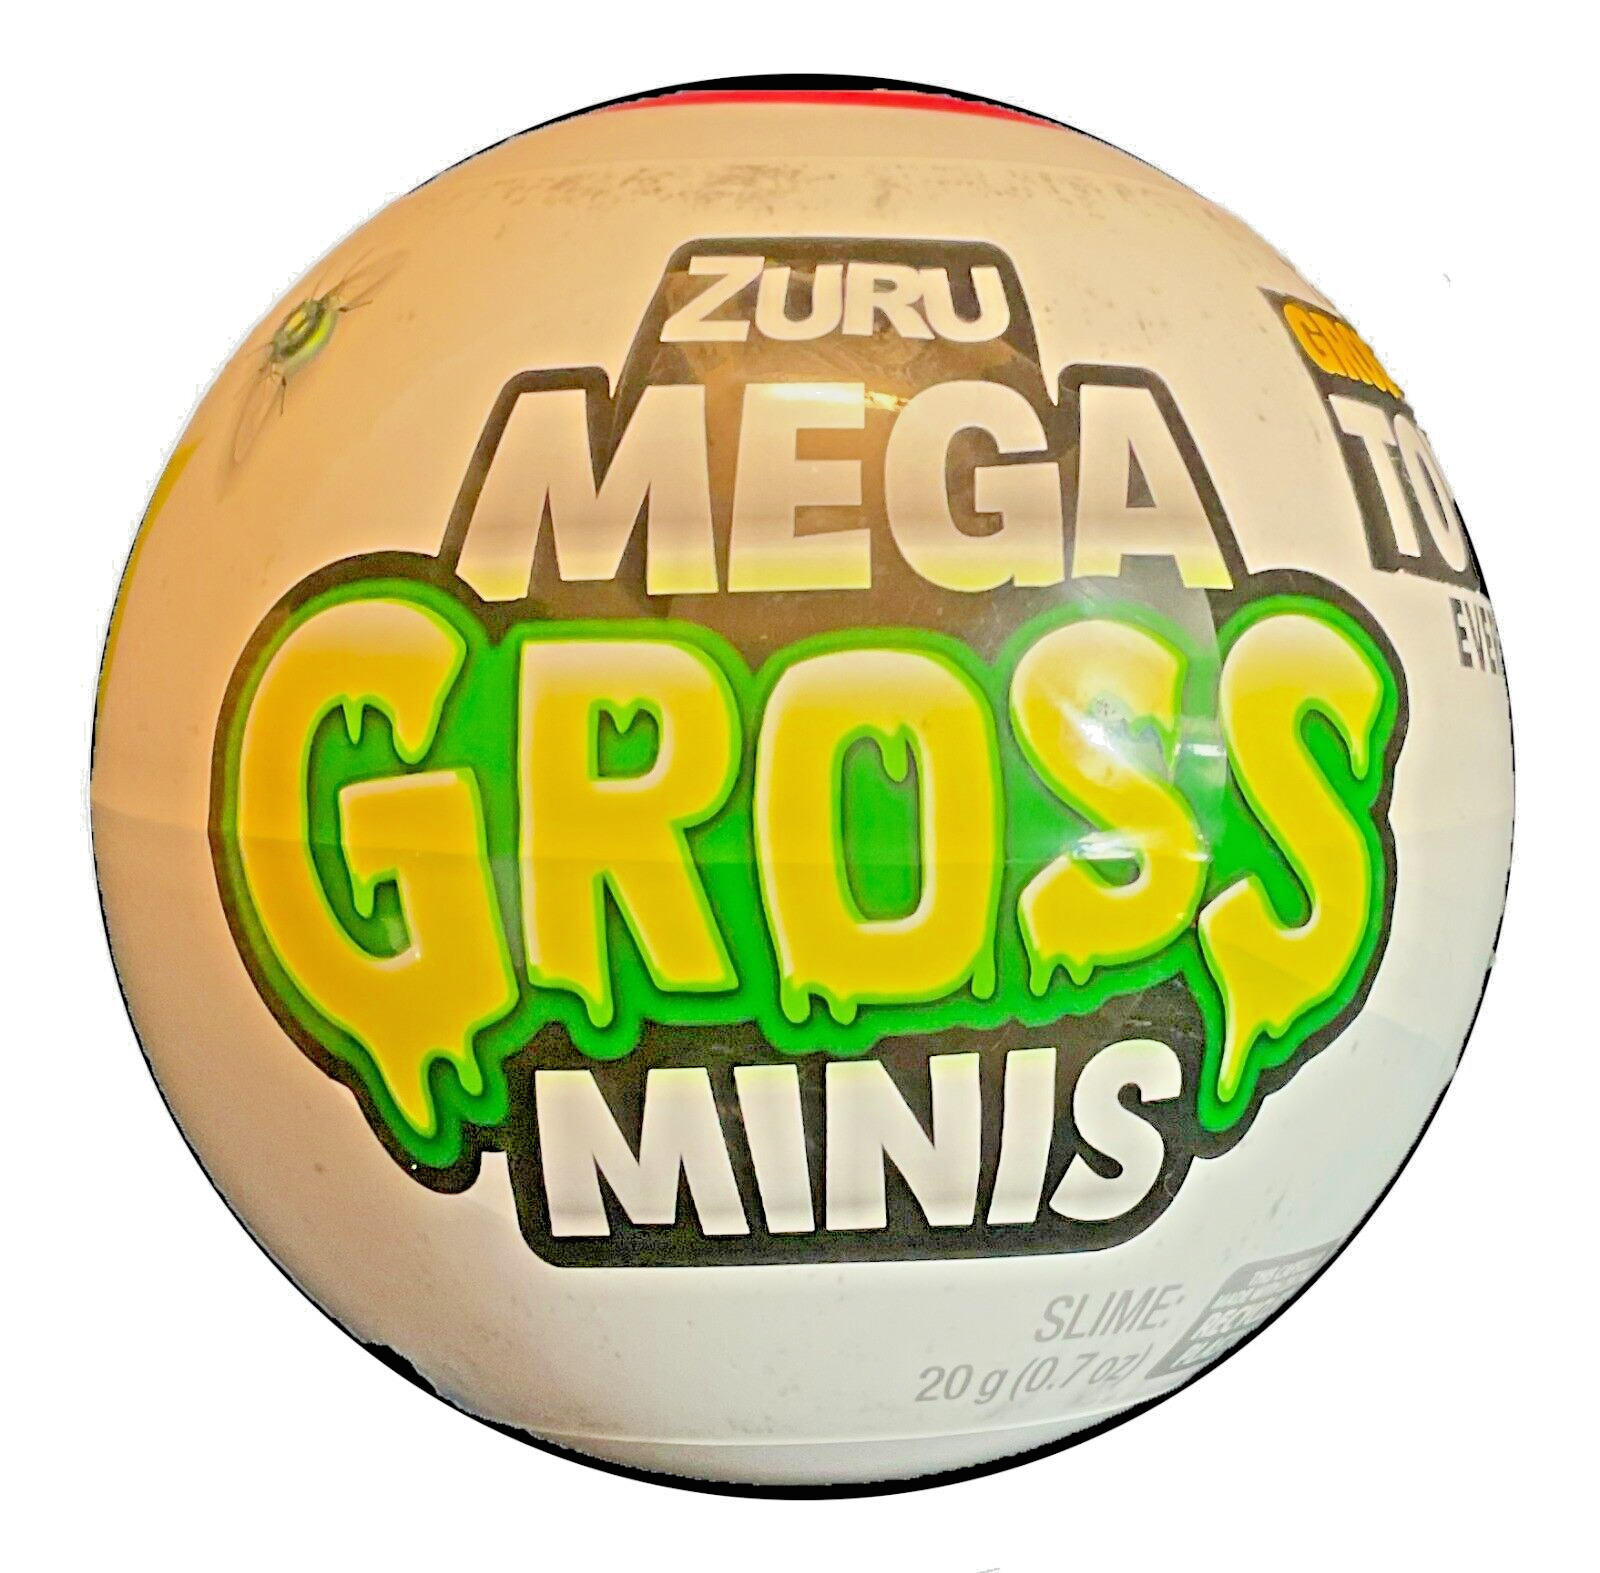 Zuru MEGA GROSS MINIS 5 Surprise Capsule Random Toy Factory Sealed 